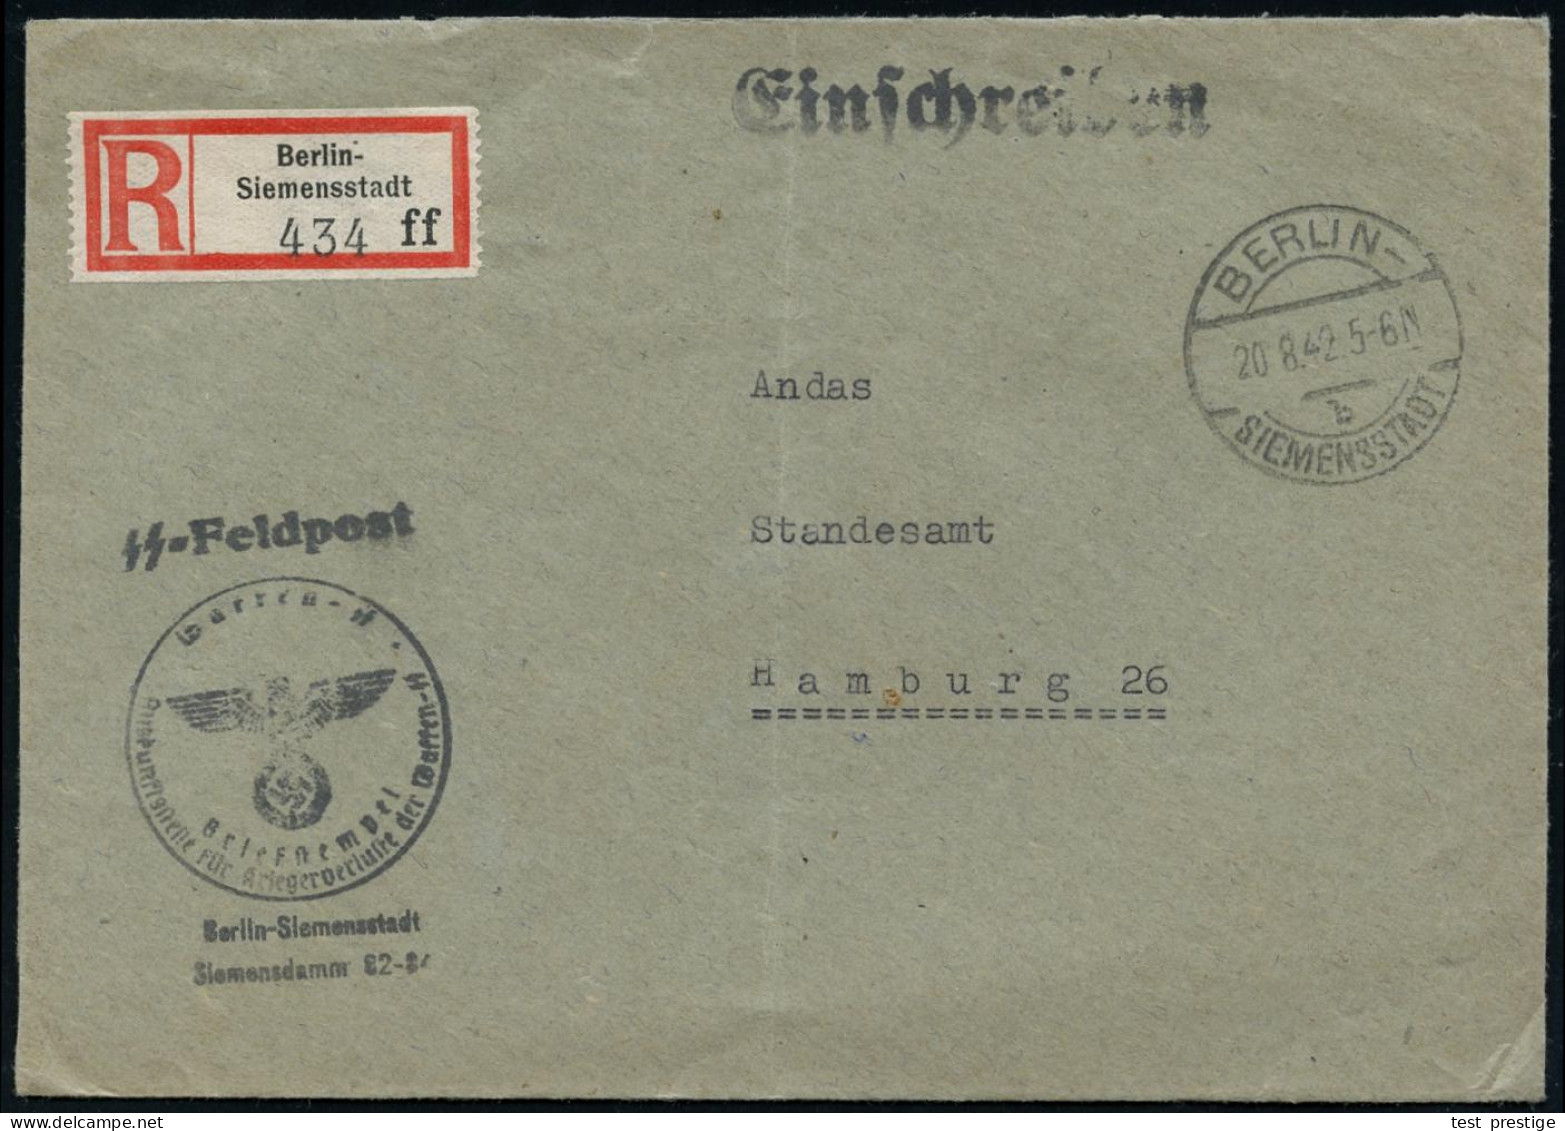 BERLIN-/ B/ SIEMENSSTADT 1942 (20.8.) 1K-Brücke + Selbstbucher-RZ: Berlin-/Siemesstadt/ F F + Hdn: S S - Feldpost/ Waffe - WW2